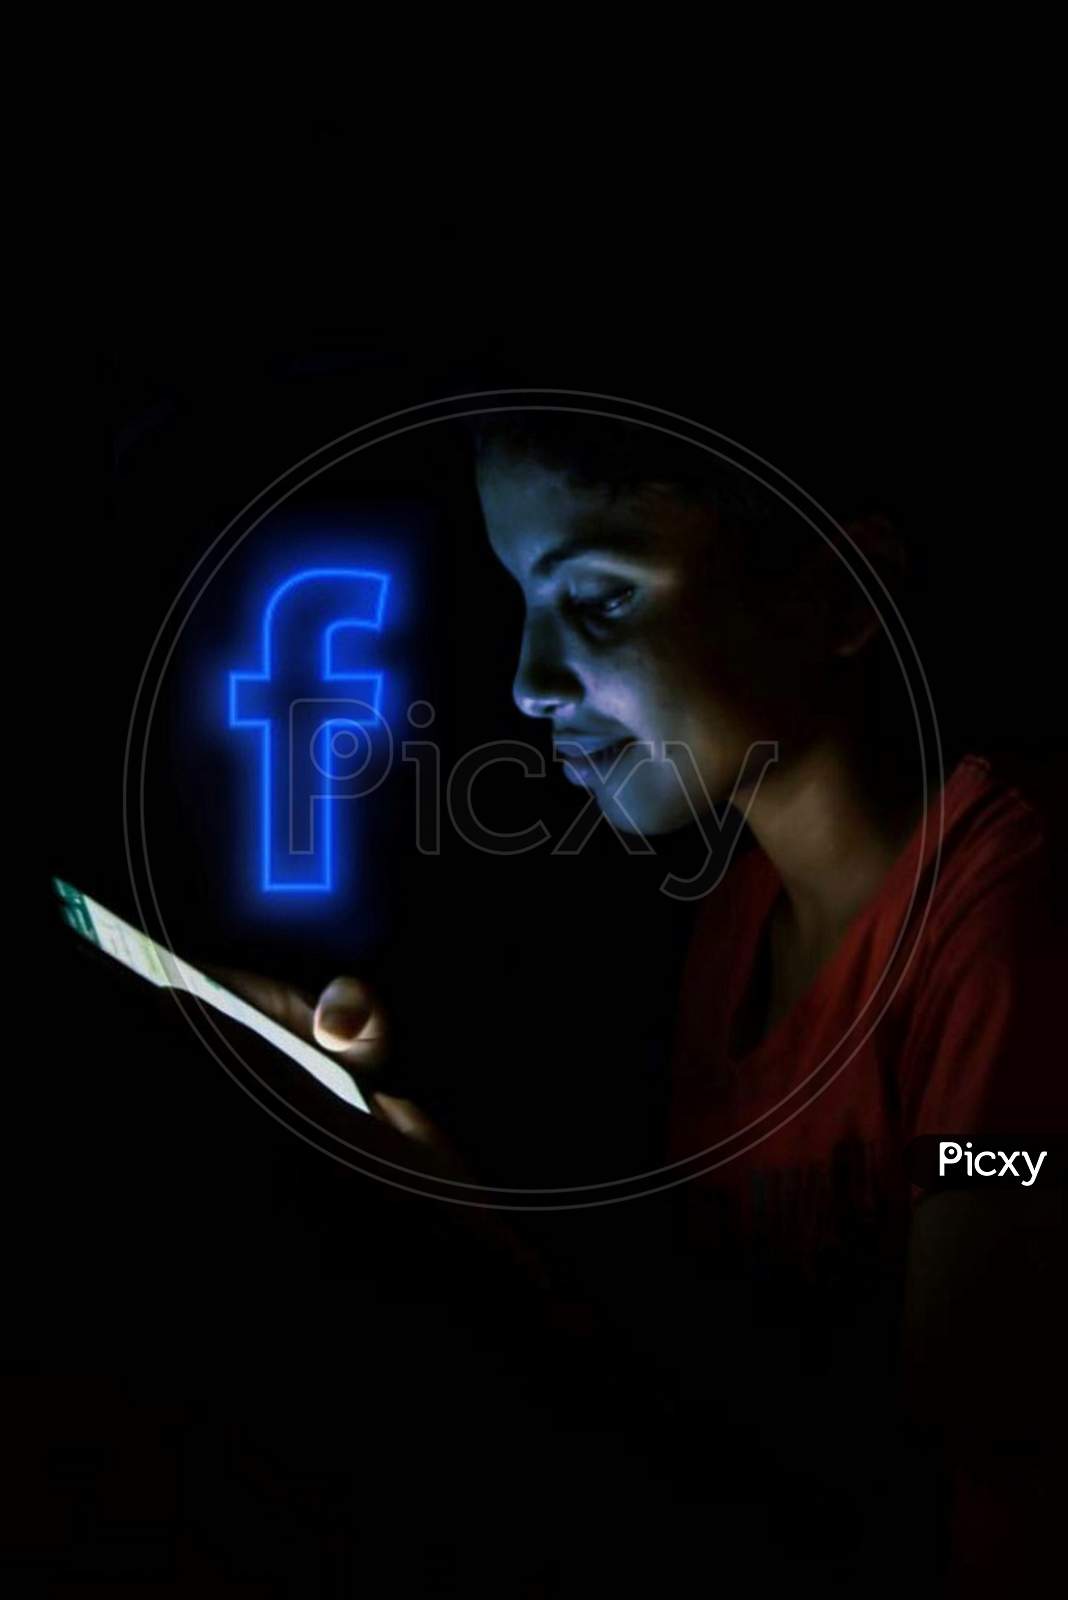 GIRL USING FACEBOOK AT NIGHT ILLUSTRATION PHOTOGRAPH